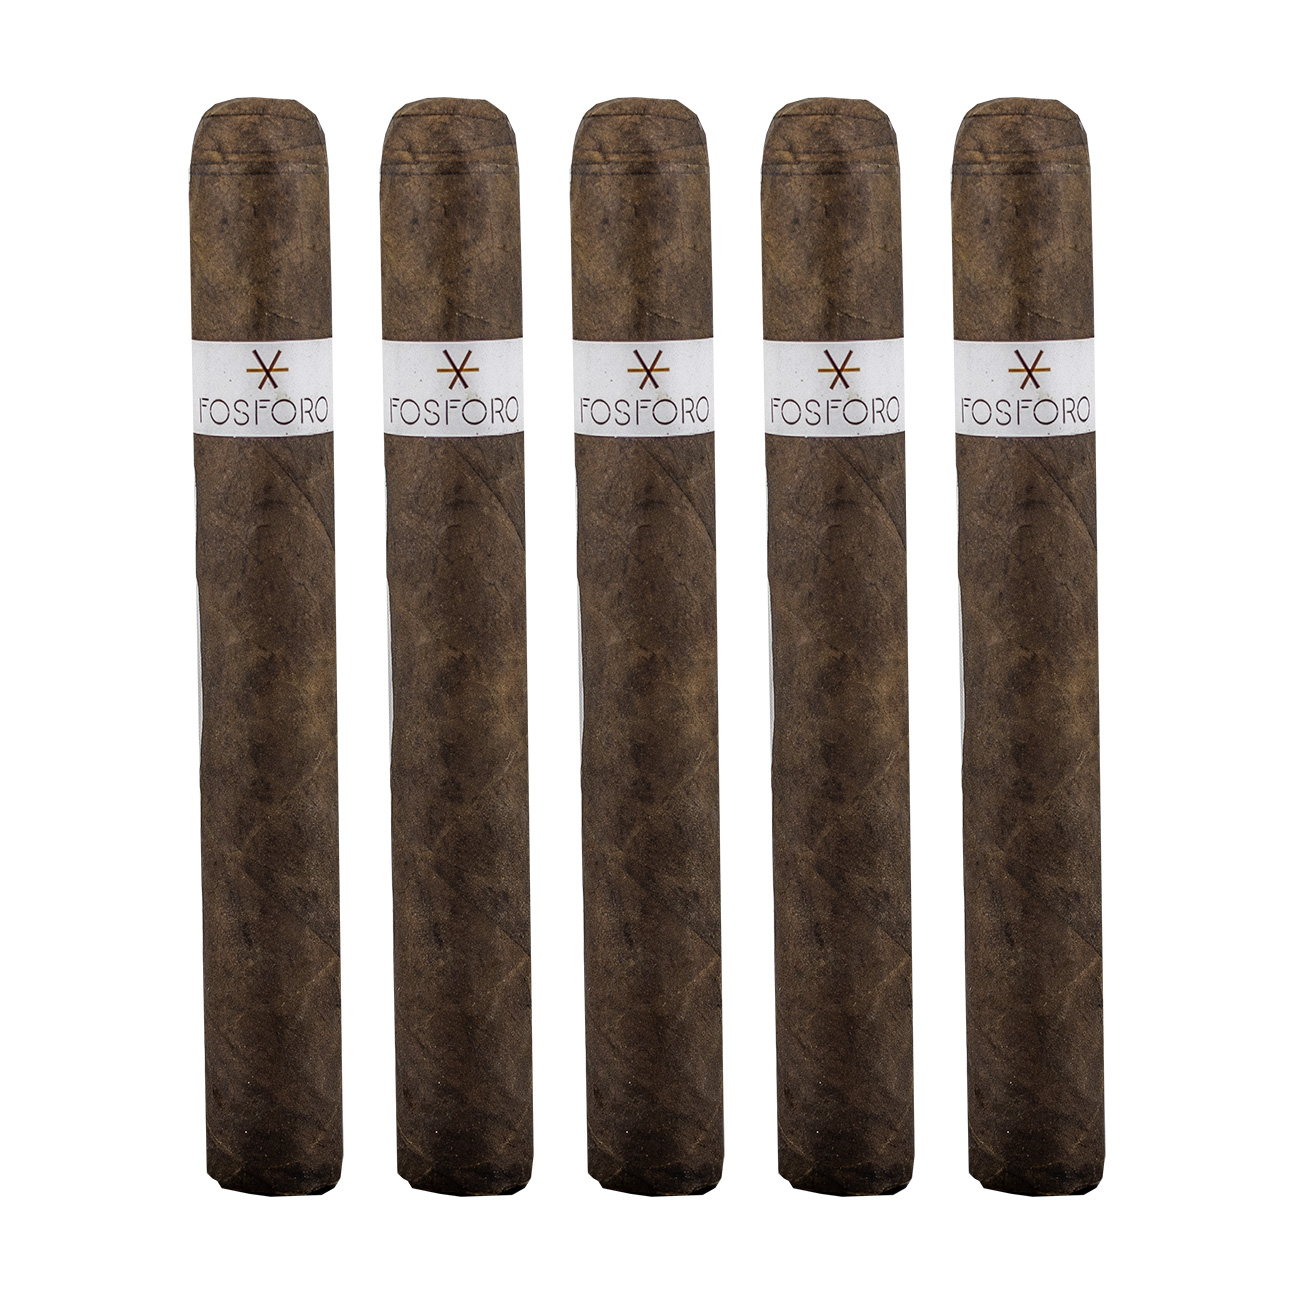 Fosforo Connecticut Toro Cigar - 5 Pack